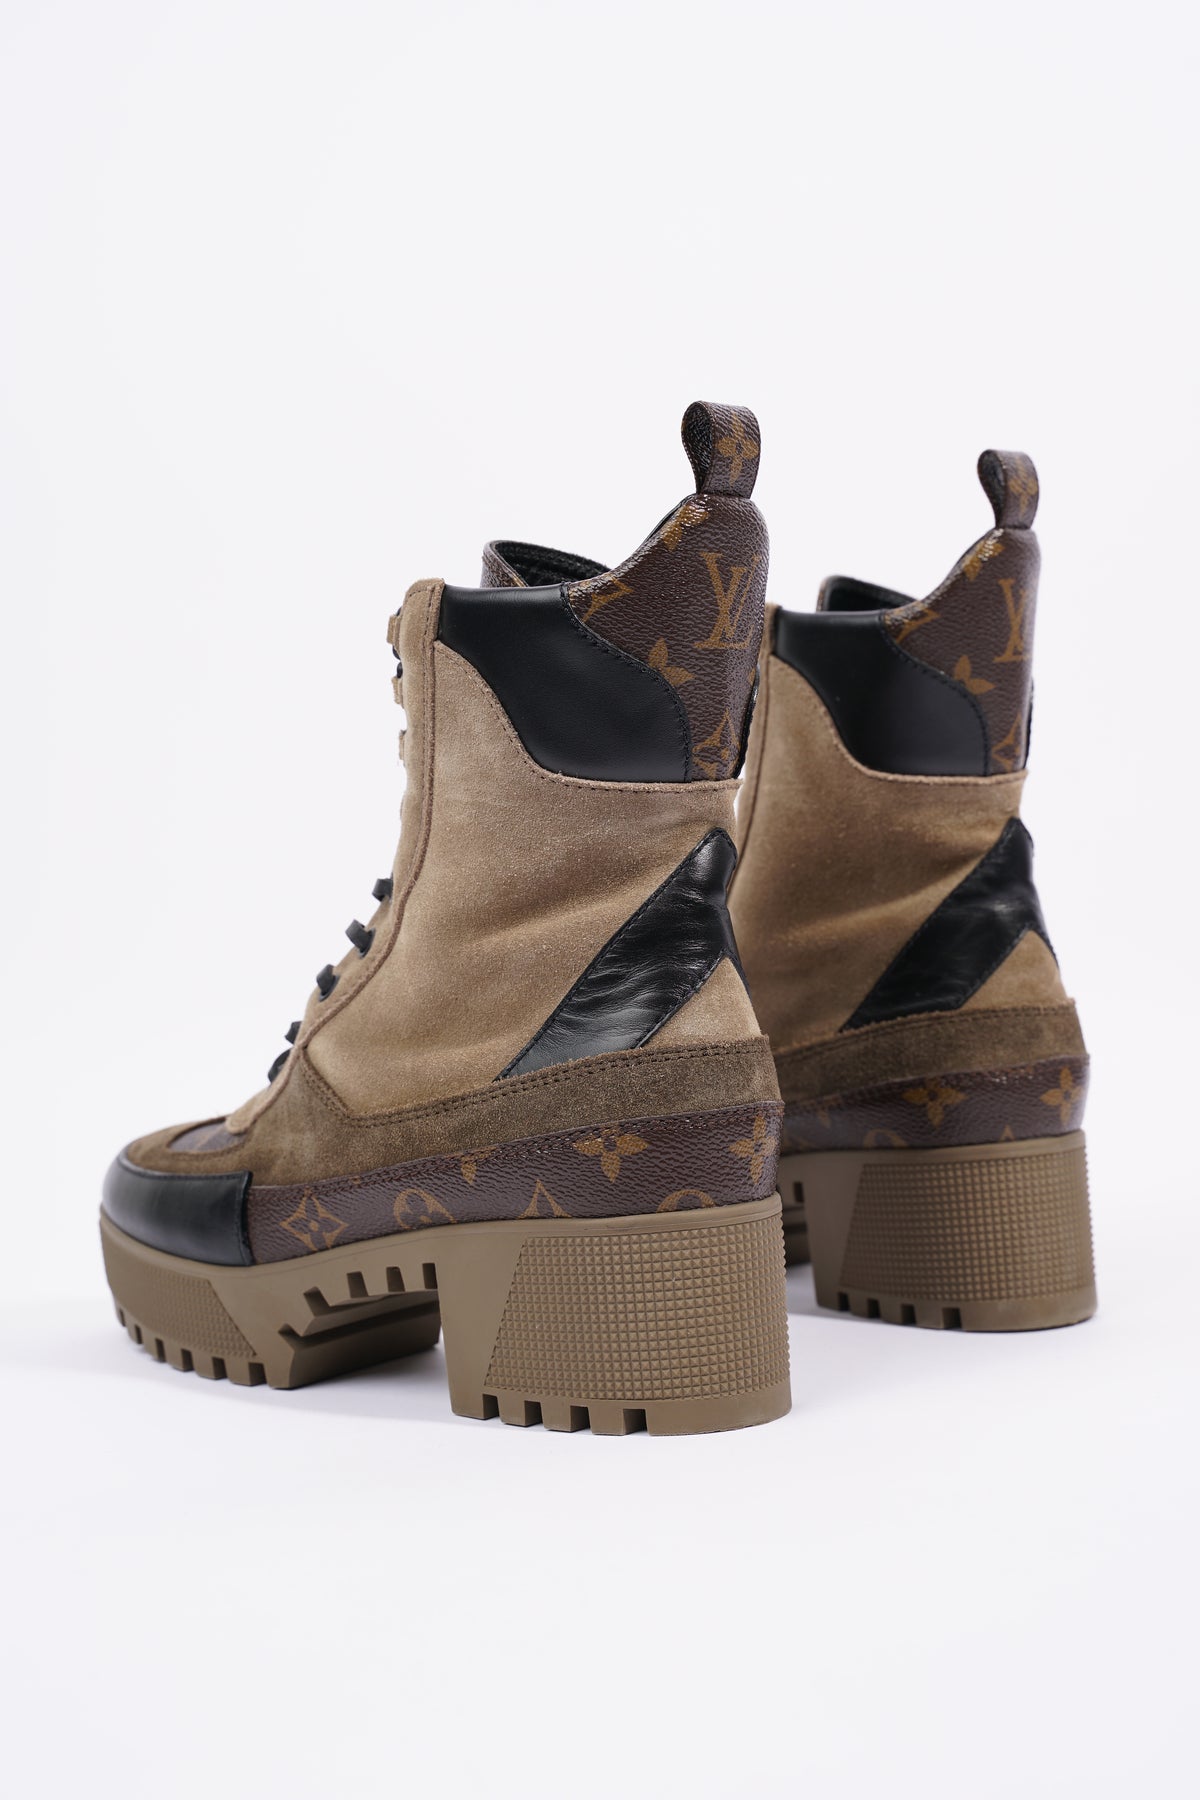 Louis Vuitton Beige Monogram Laureate Desert Boots - size 39